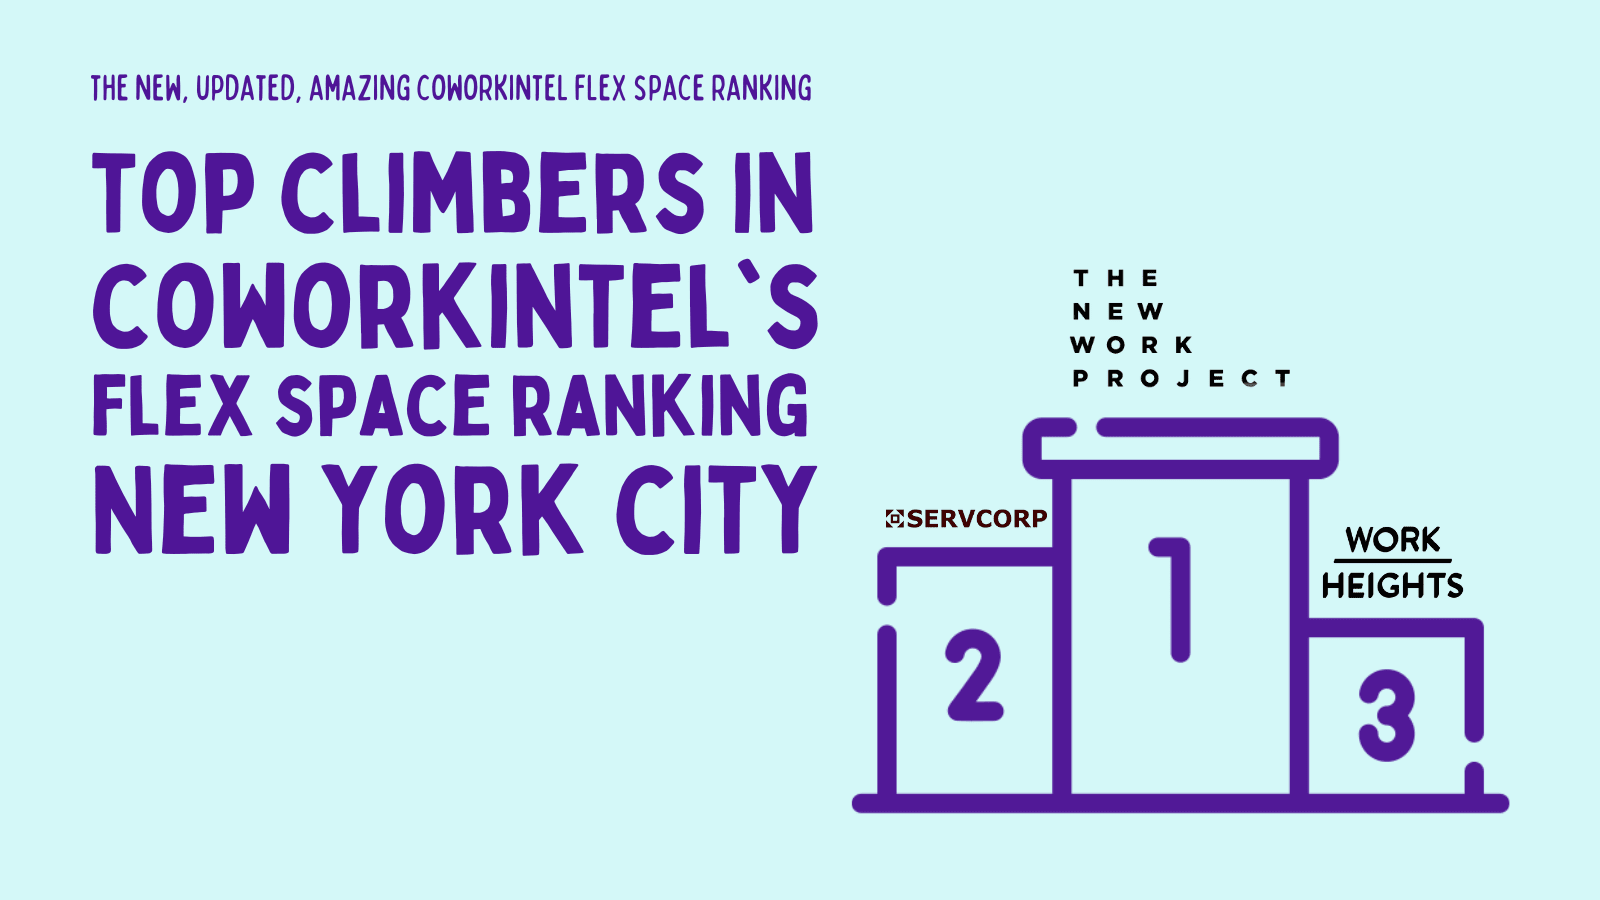 https://www.coworkintel.com/best-coworking-spaces/new-york-city/